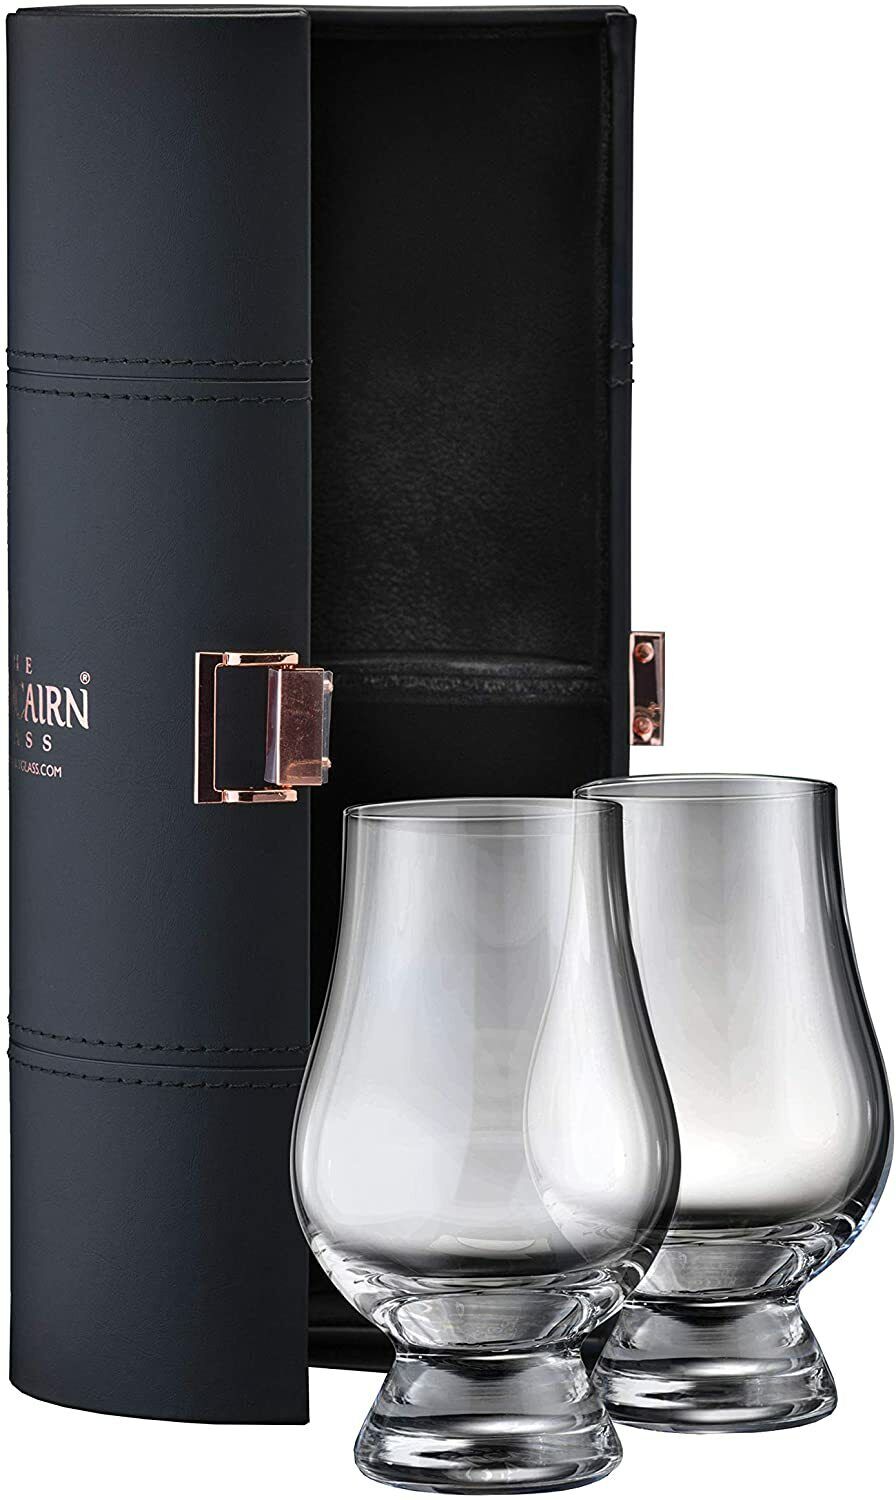 Glencairn Original Whisky Glass, Set of Two in Black Leather Travel Case 6oz